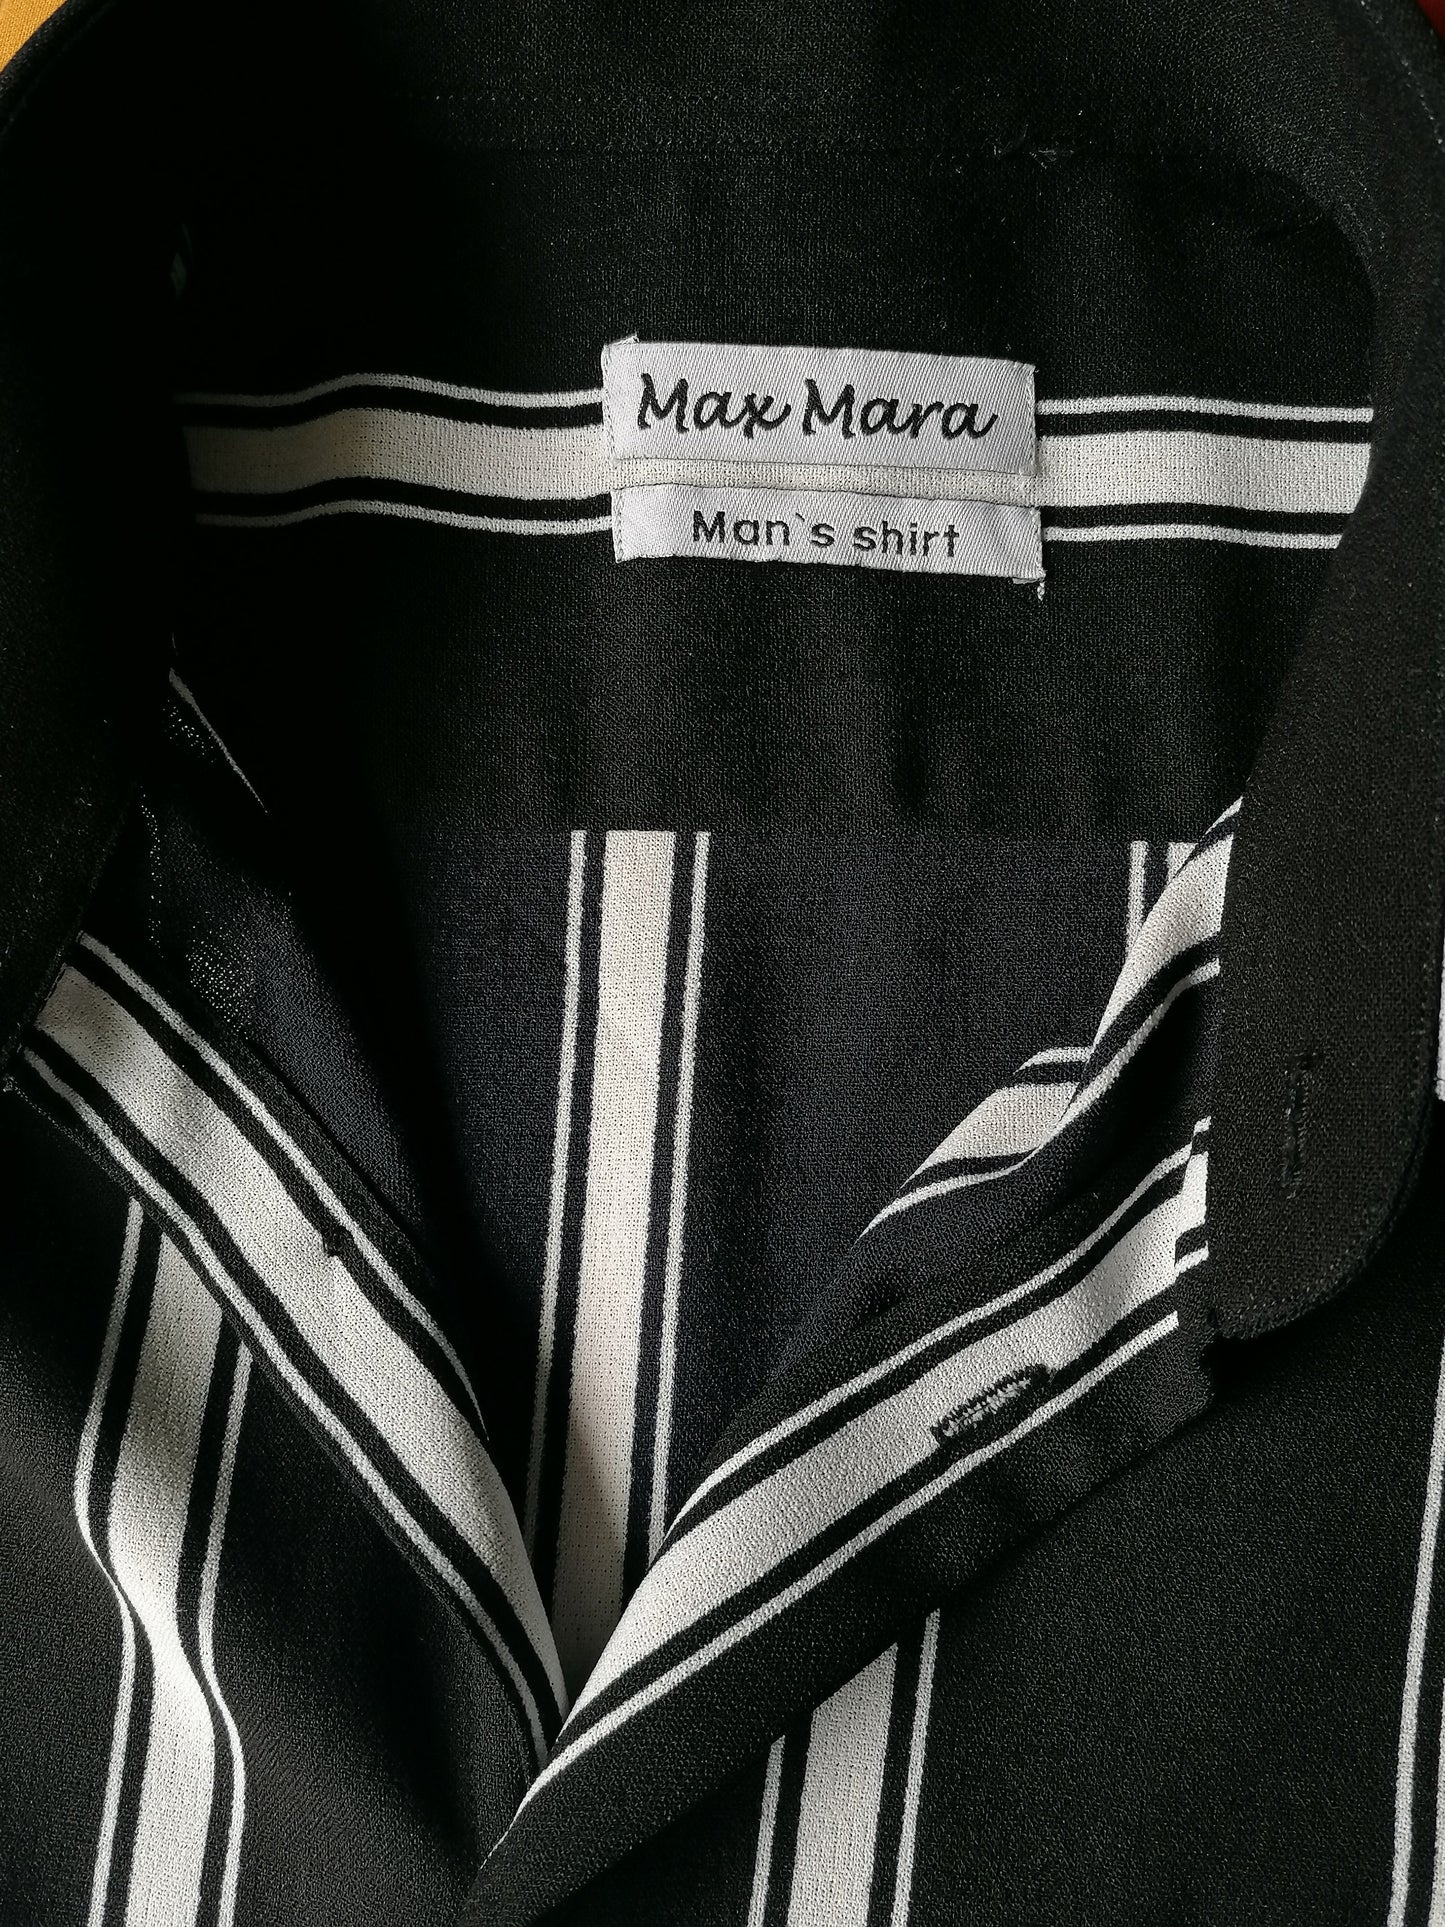 Max Mara Vintage Shirt short sleeve. Black and white striped. Size XL.